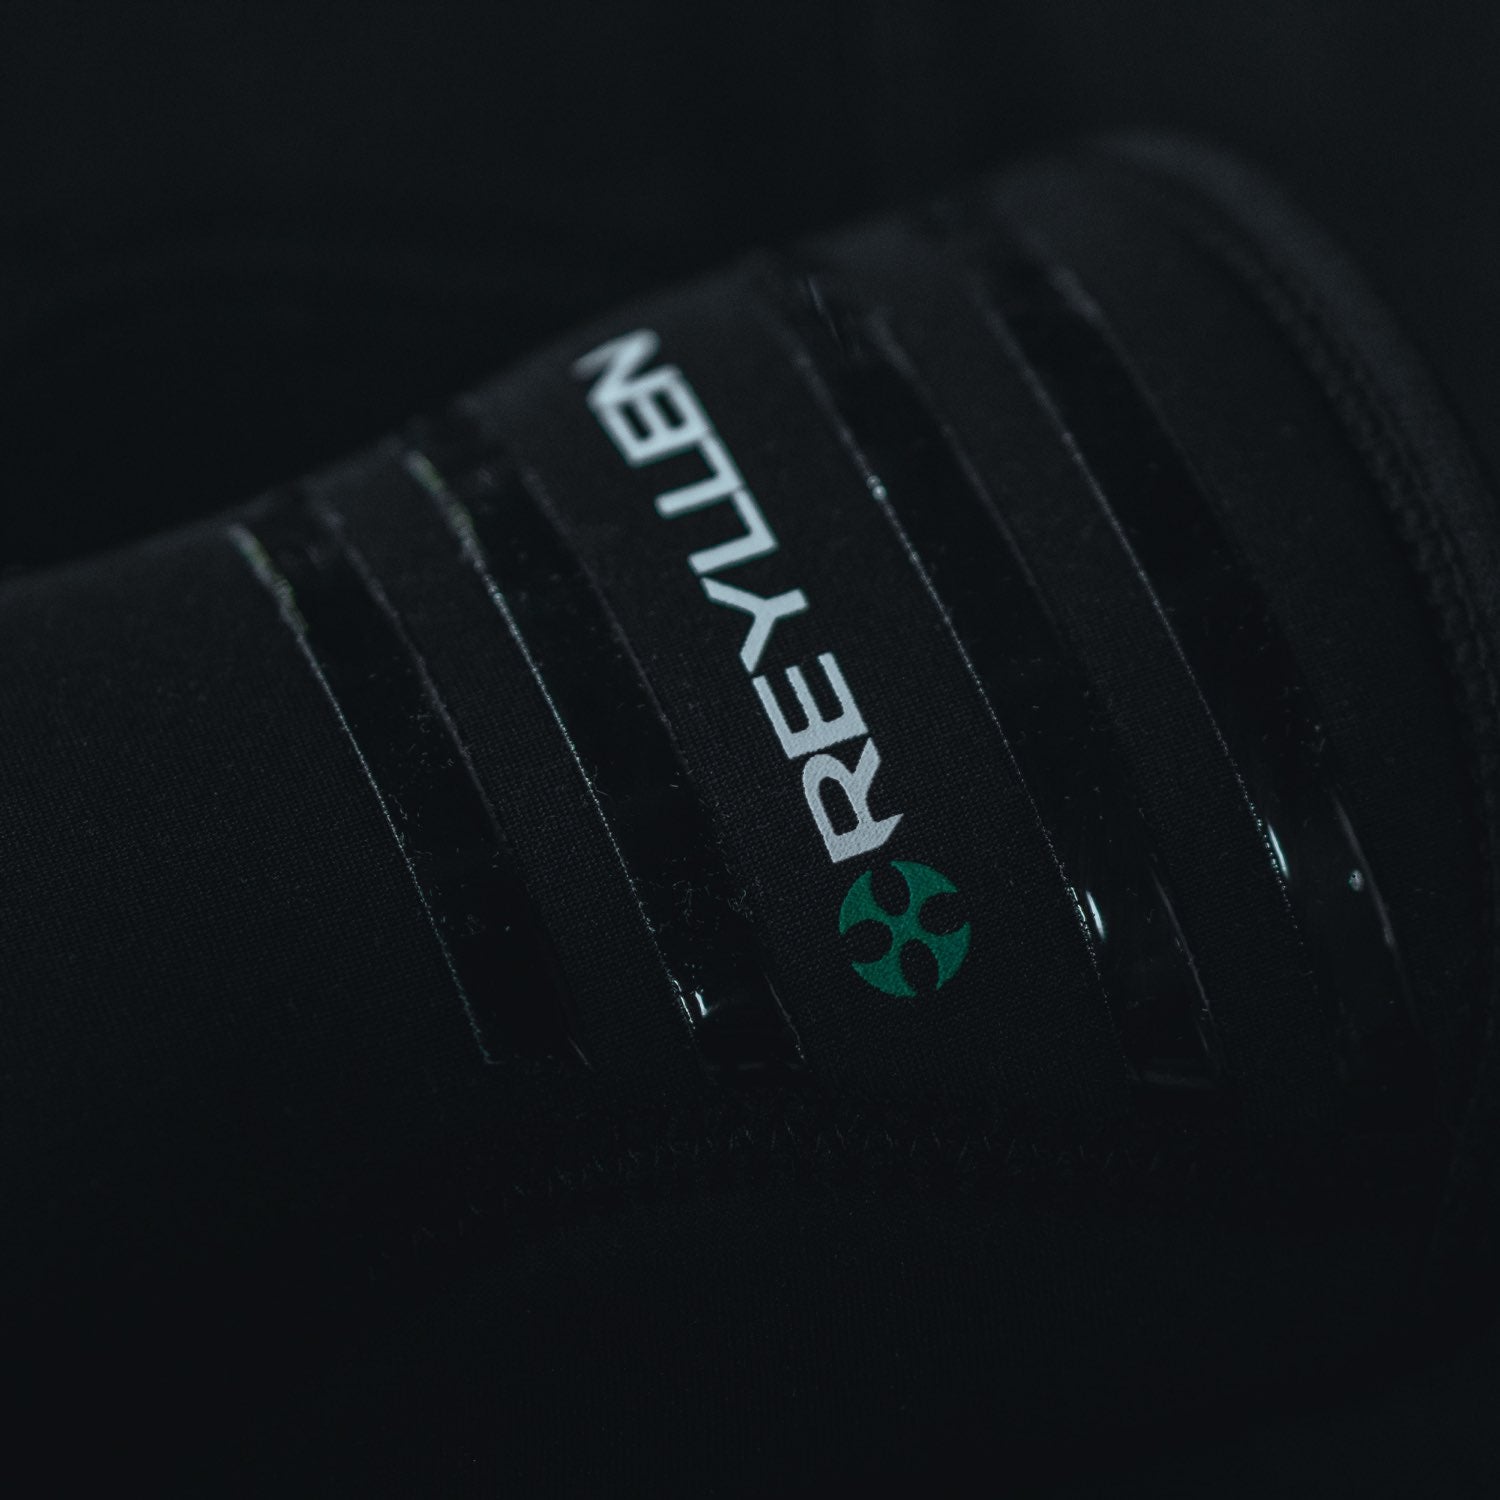 Venta X3 Knee Sleeves Neoprene Brace Compression Support 7mm - Black - anti slip strips detail view | Reyllen 